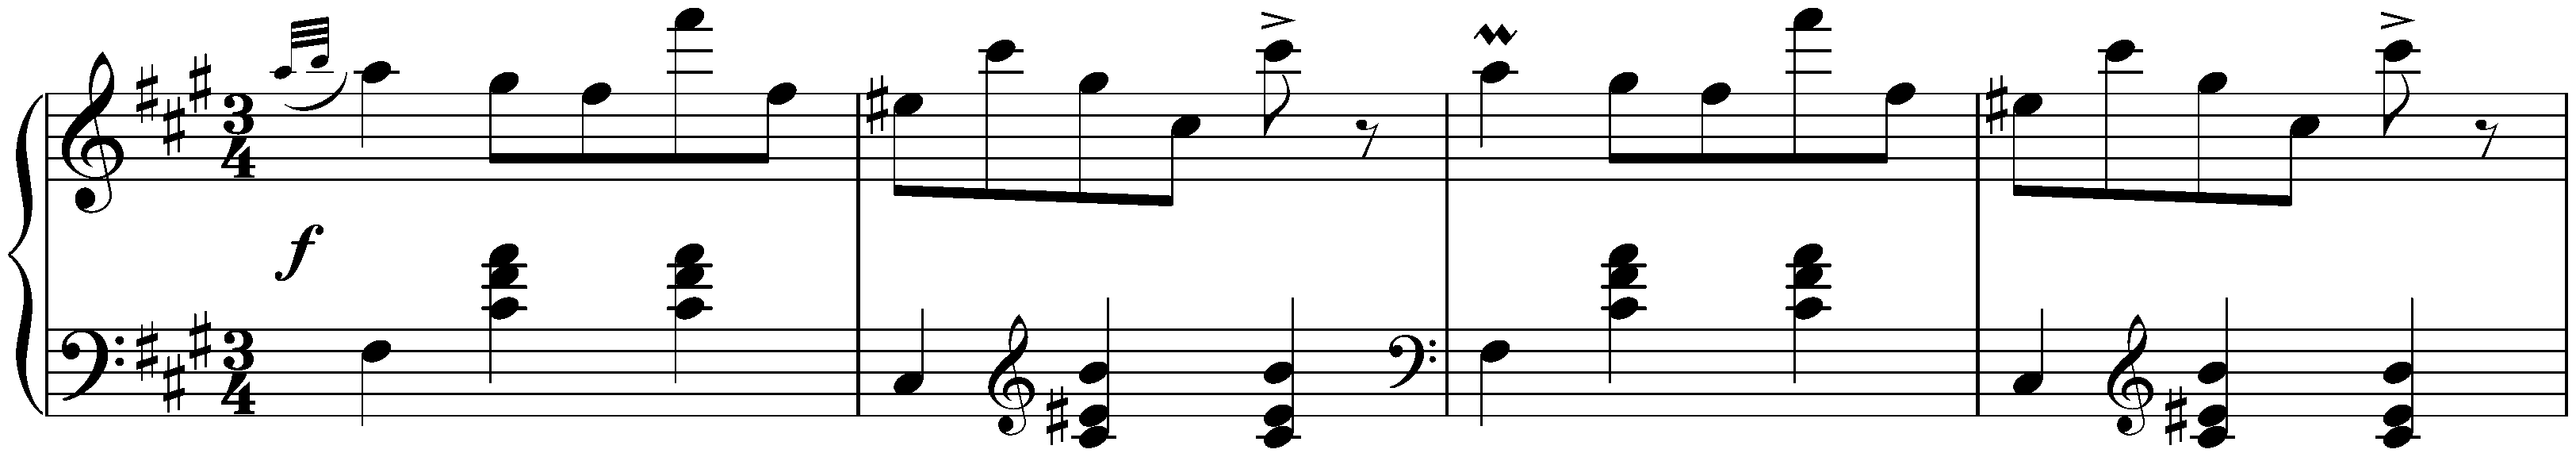 Twelve Grazer Walzer, D 924; 6. F-sharp minor